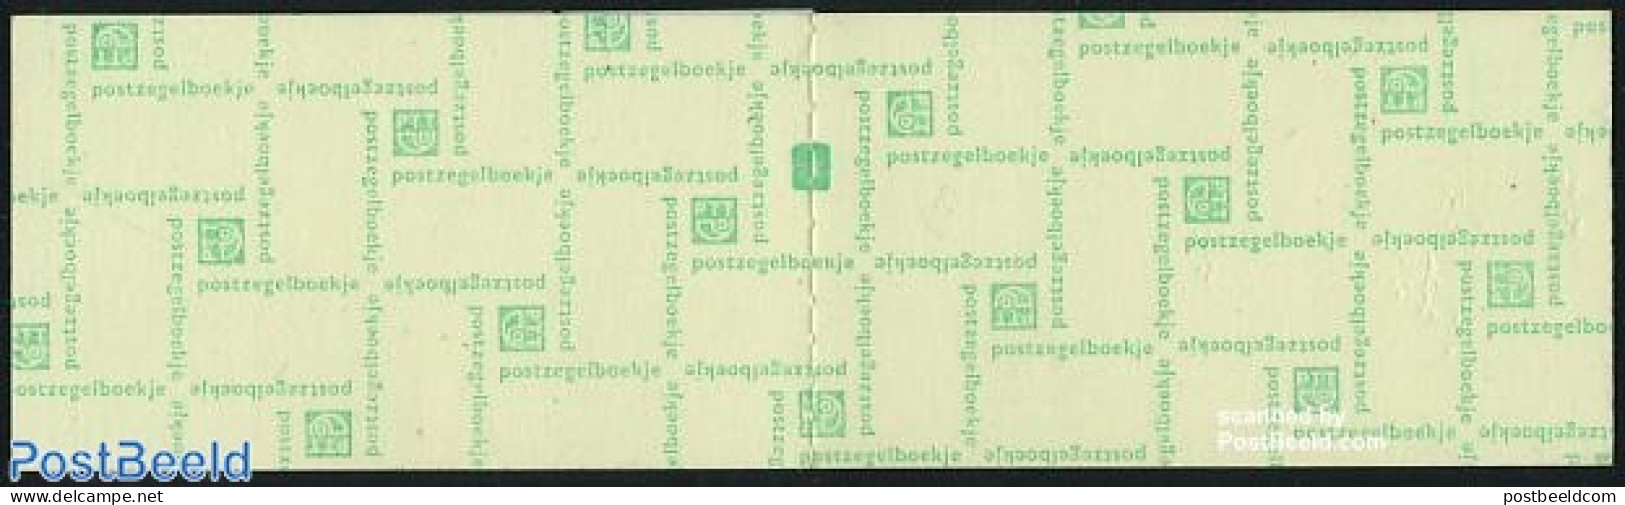 Netherlands 1975 6x30+4x5c MET TELBLOK, Mint NH, Stamp Booklets - Unused Stamps